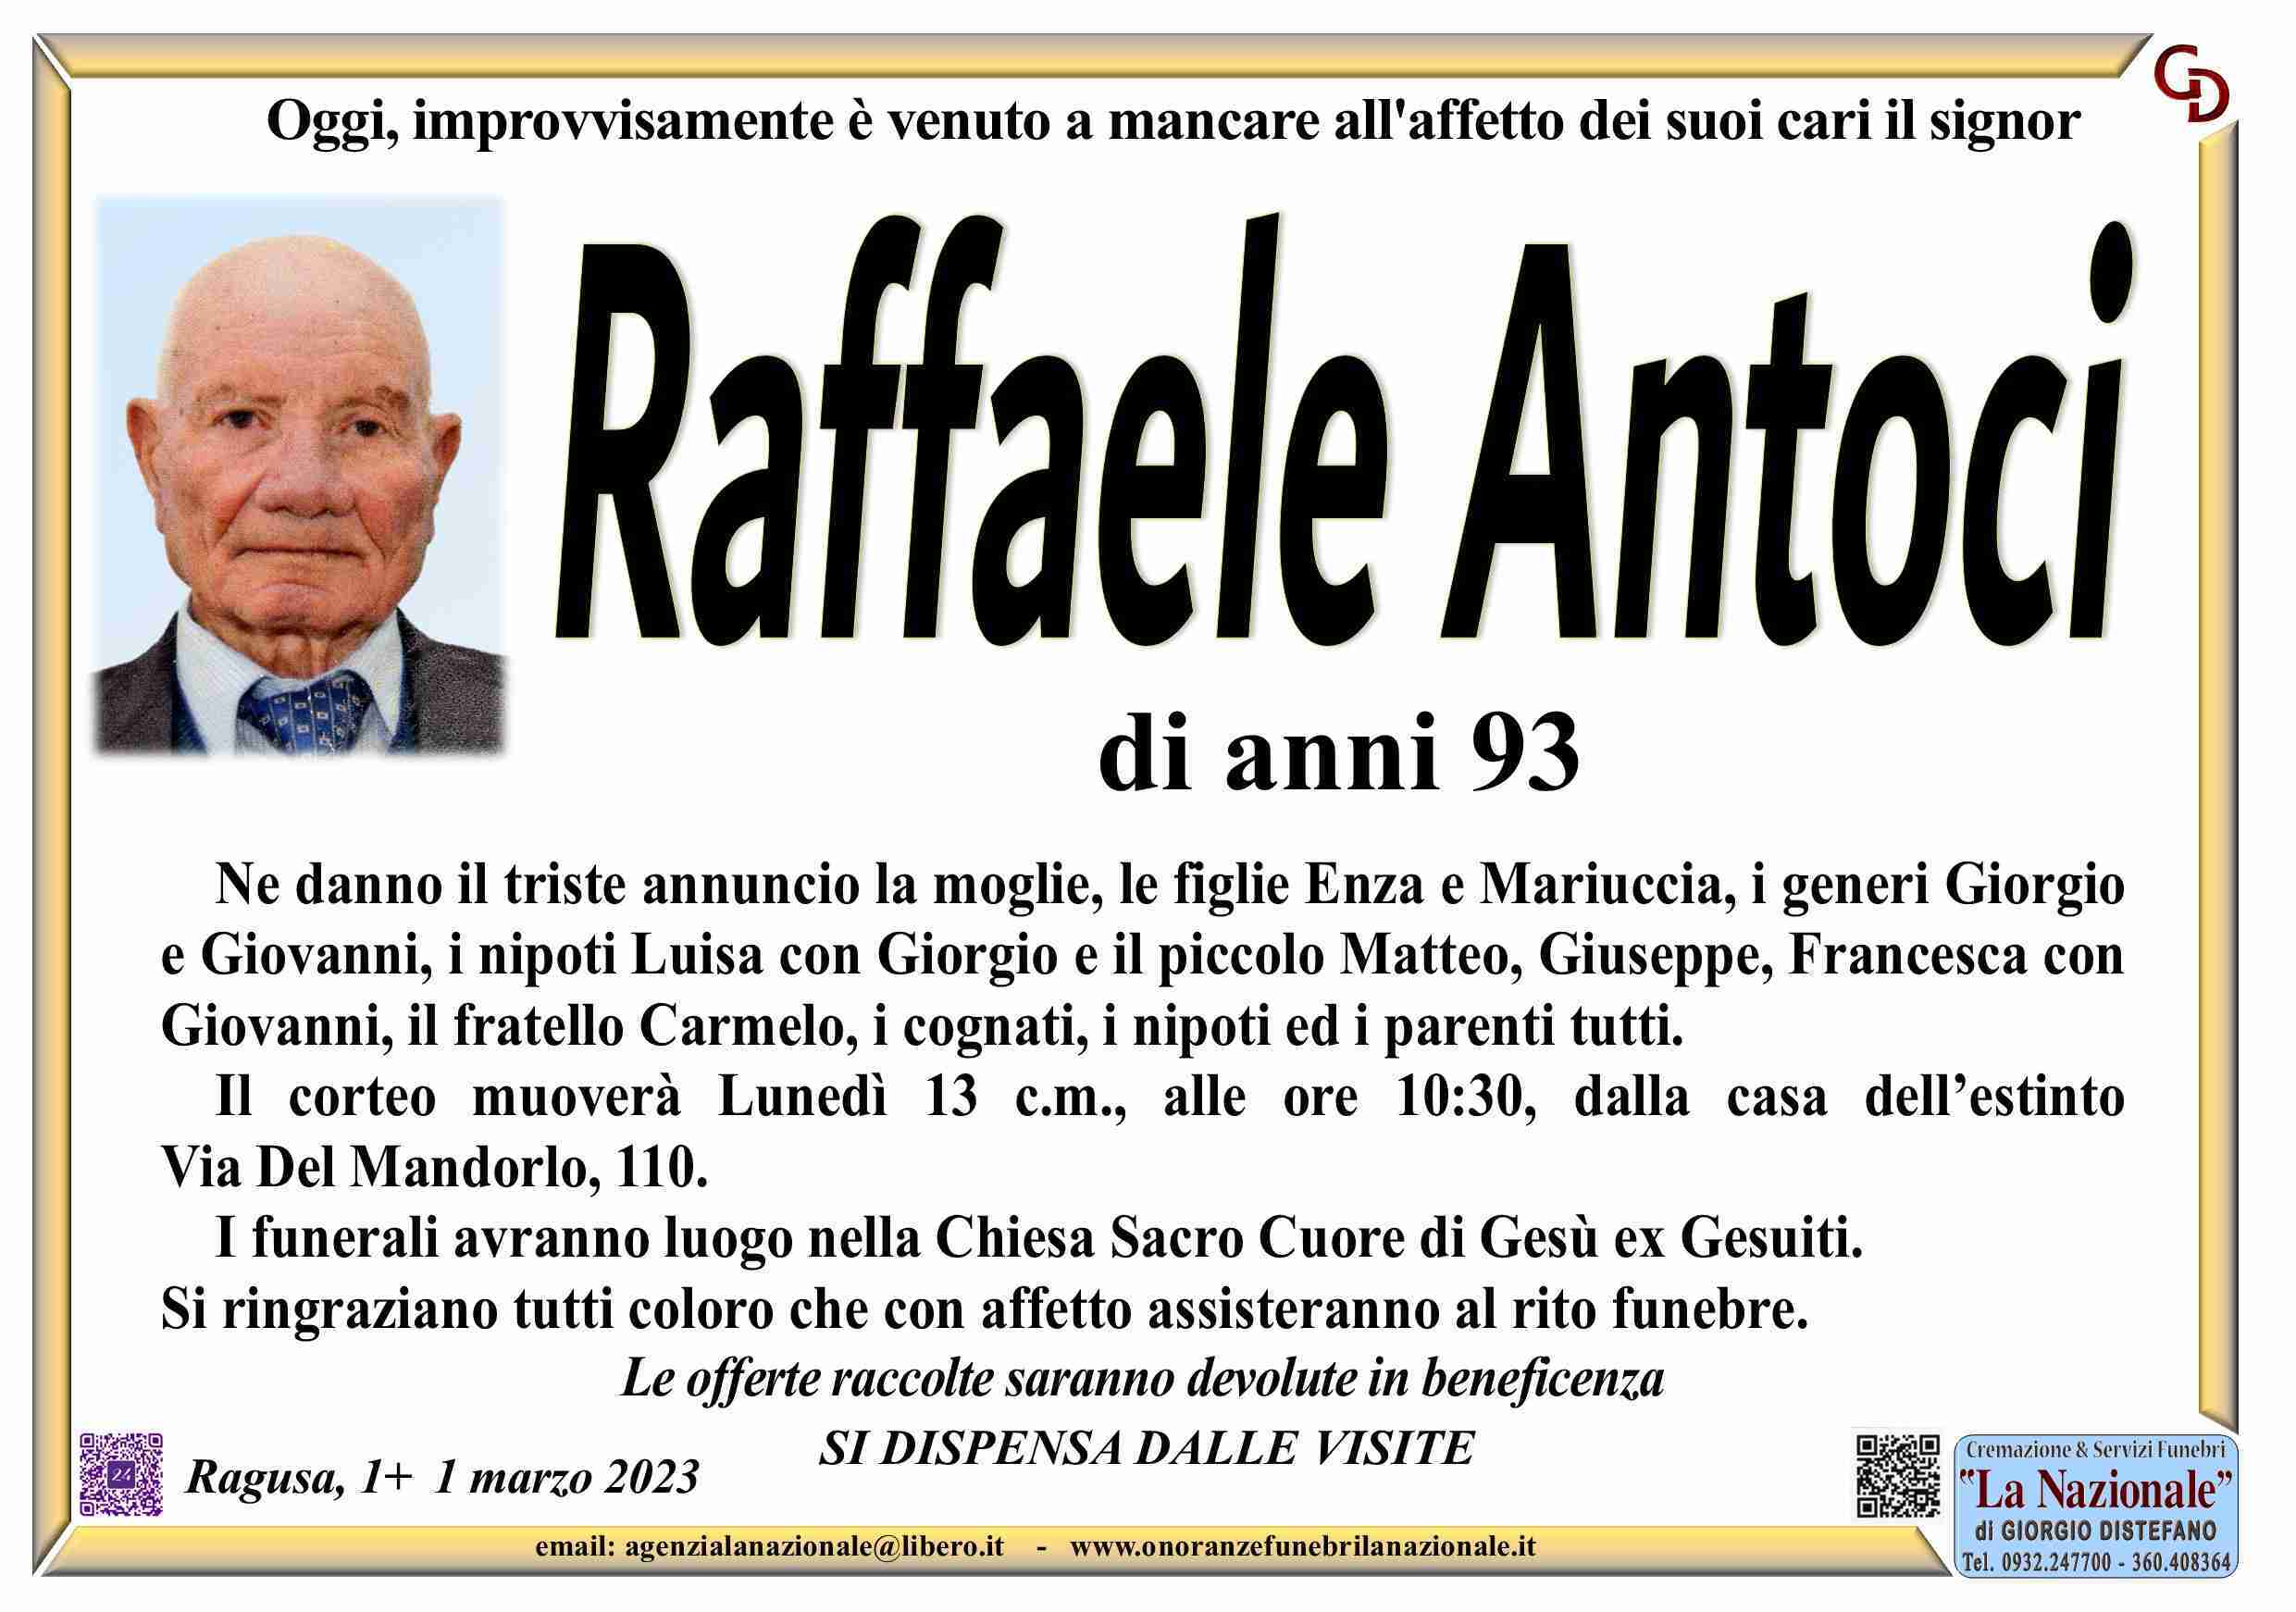 Raffaele Antoci